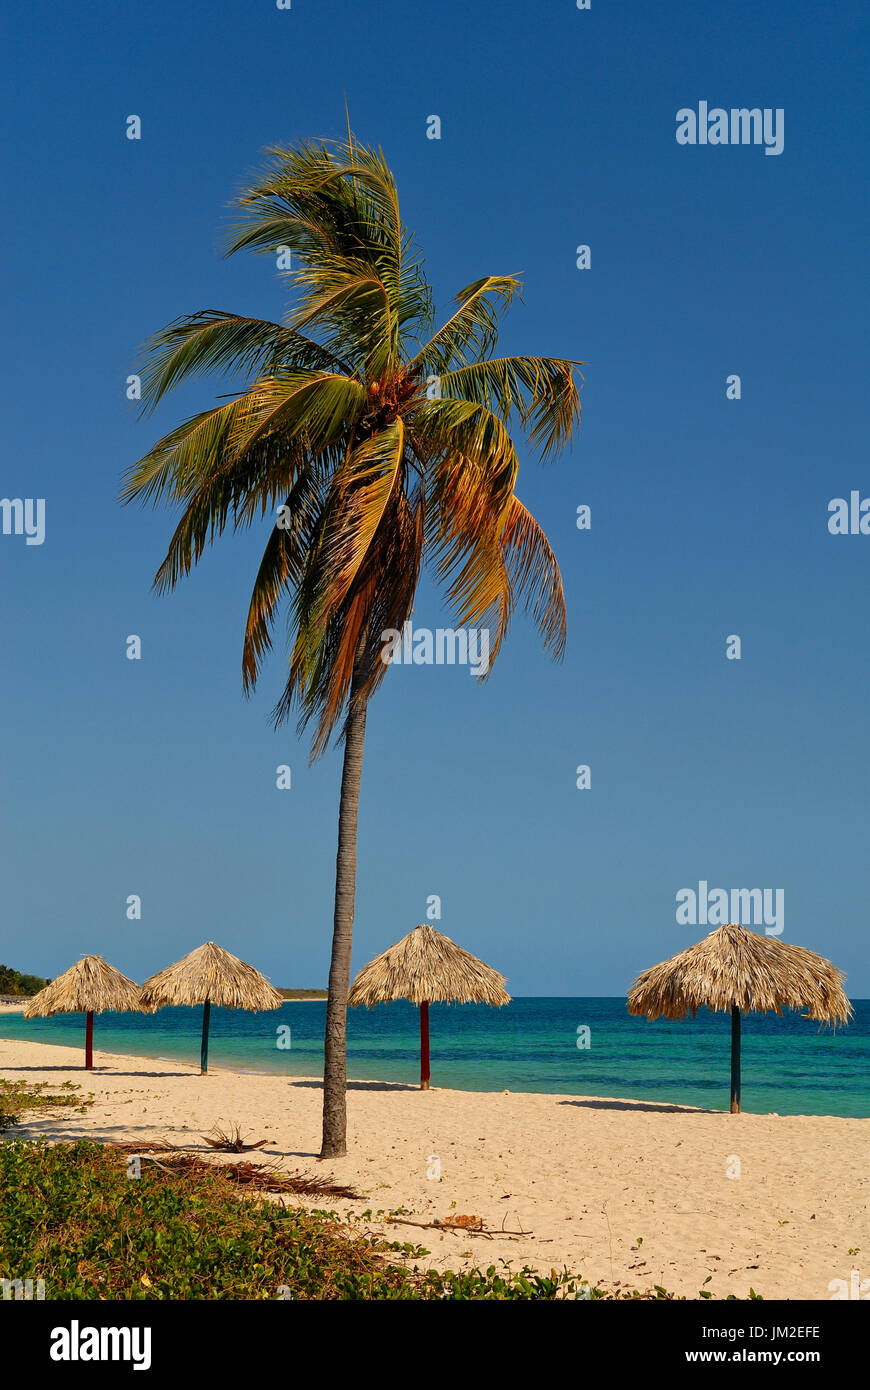 Eine einsame Palme am Strand Playa Ancon, Kuba. Stockfoto